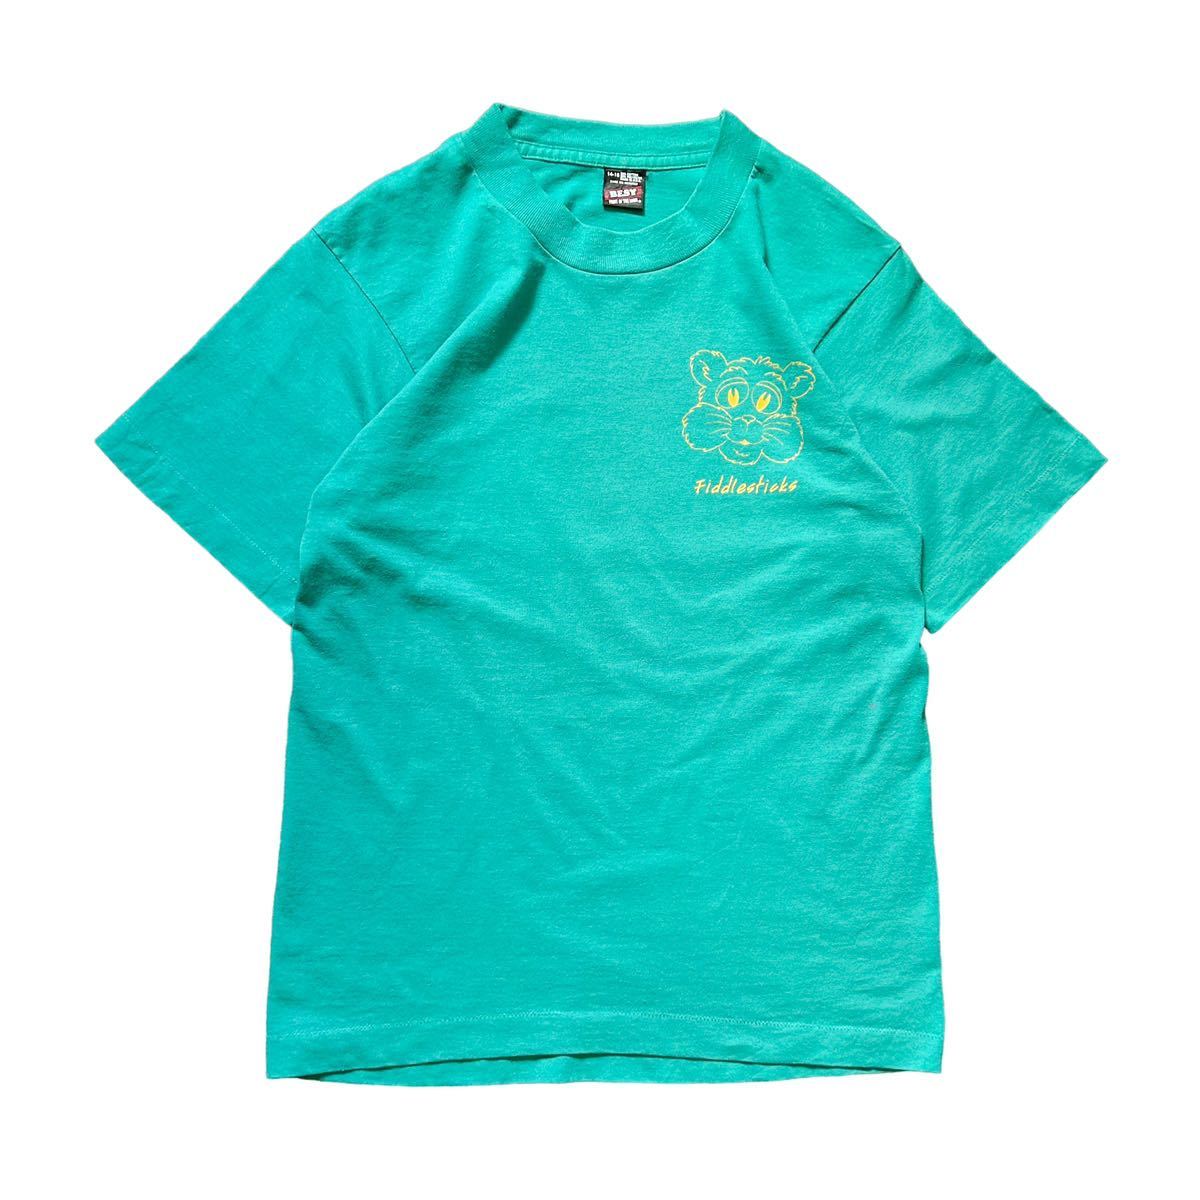 USA製 90’s FRUIT OF THE LOOM ヴィンテージ Tシャツ 緑 グリーン キッズ 14-16サイズ メンズSサイズ相当 アニマル プリント レディース_画像2